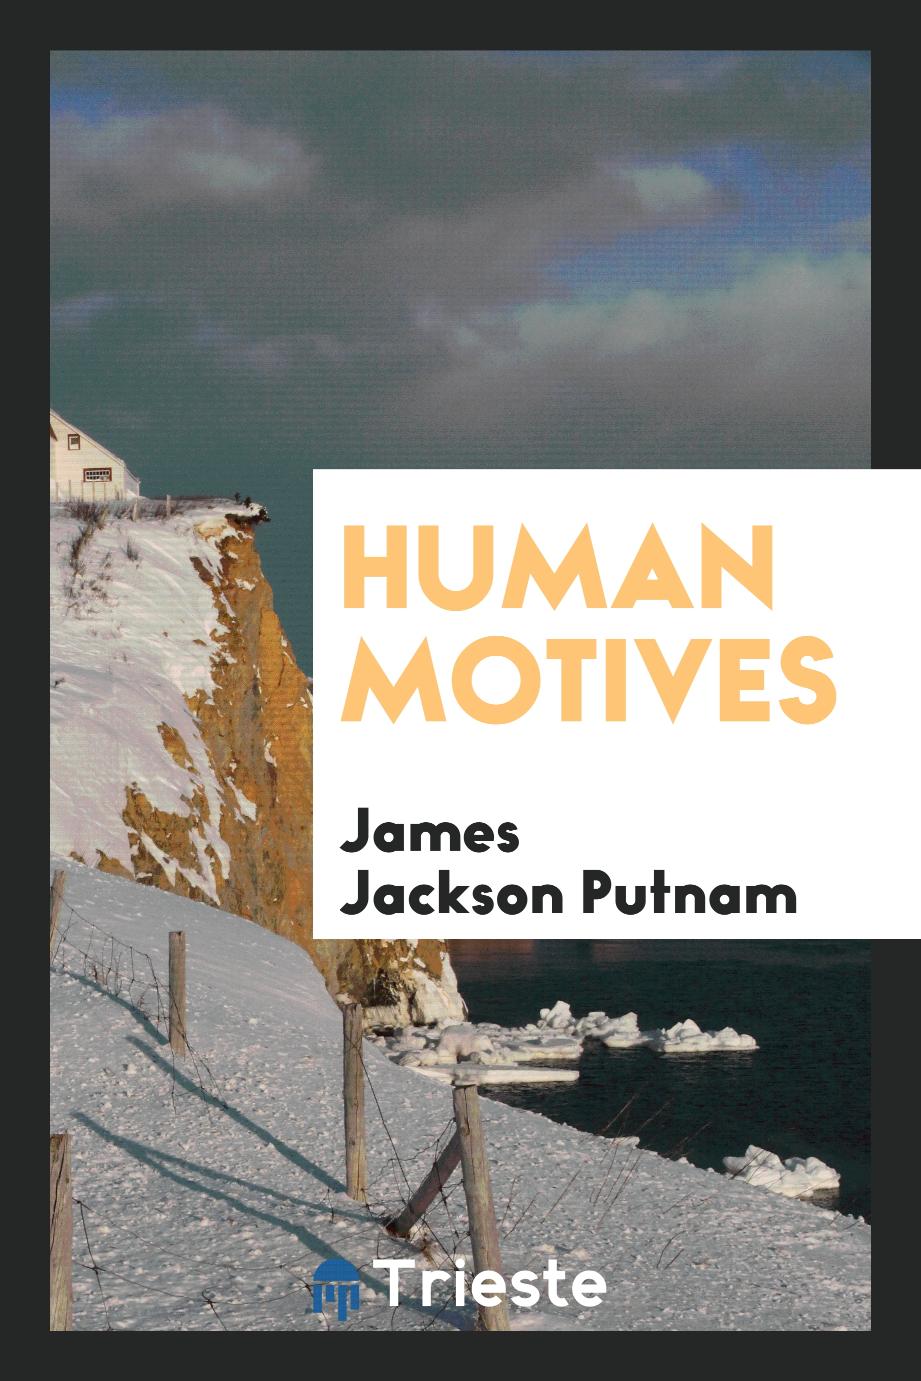 Human motives